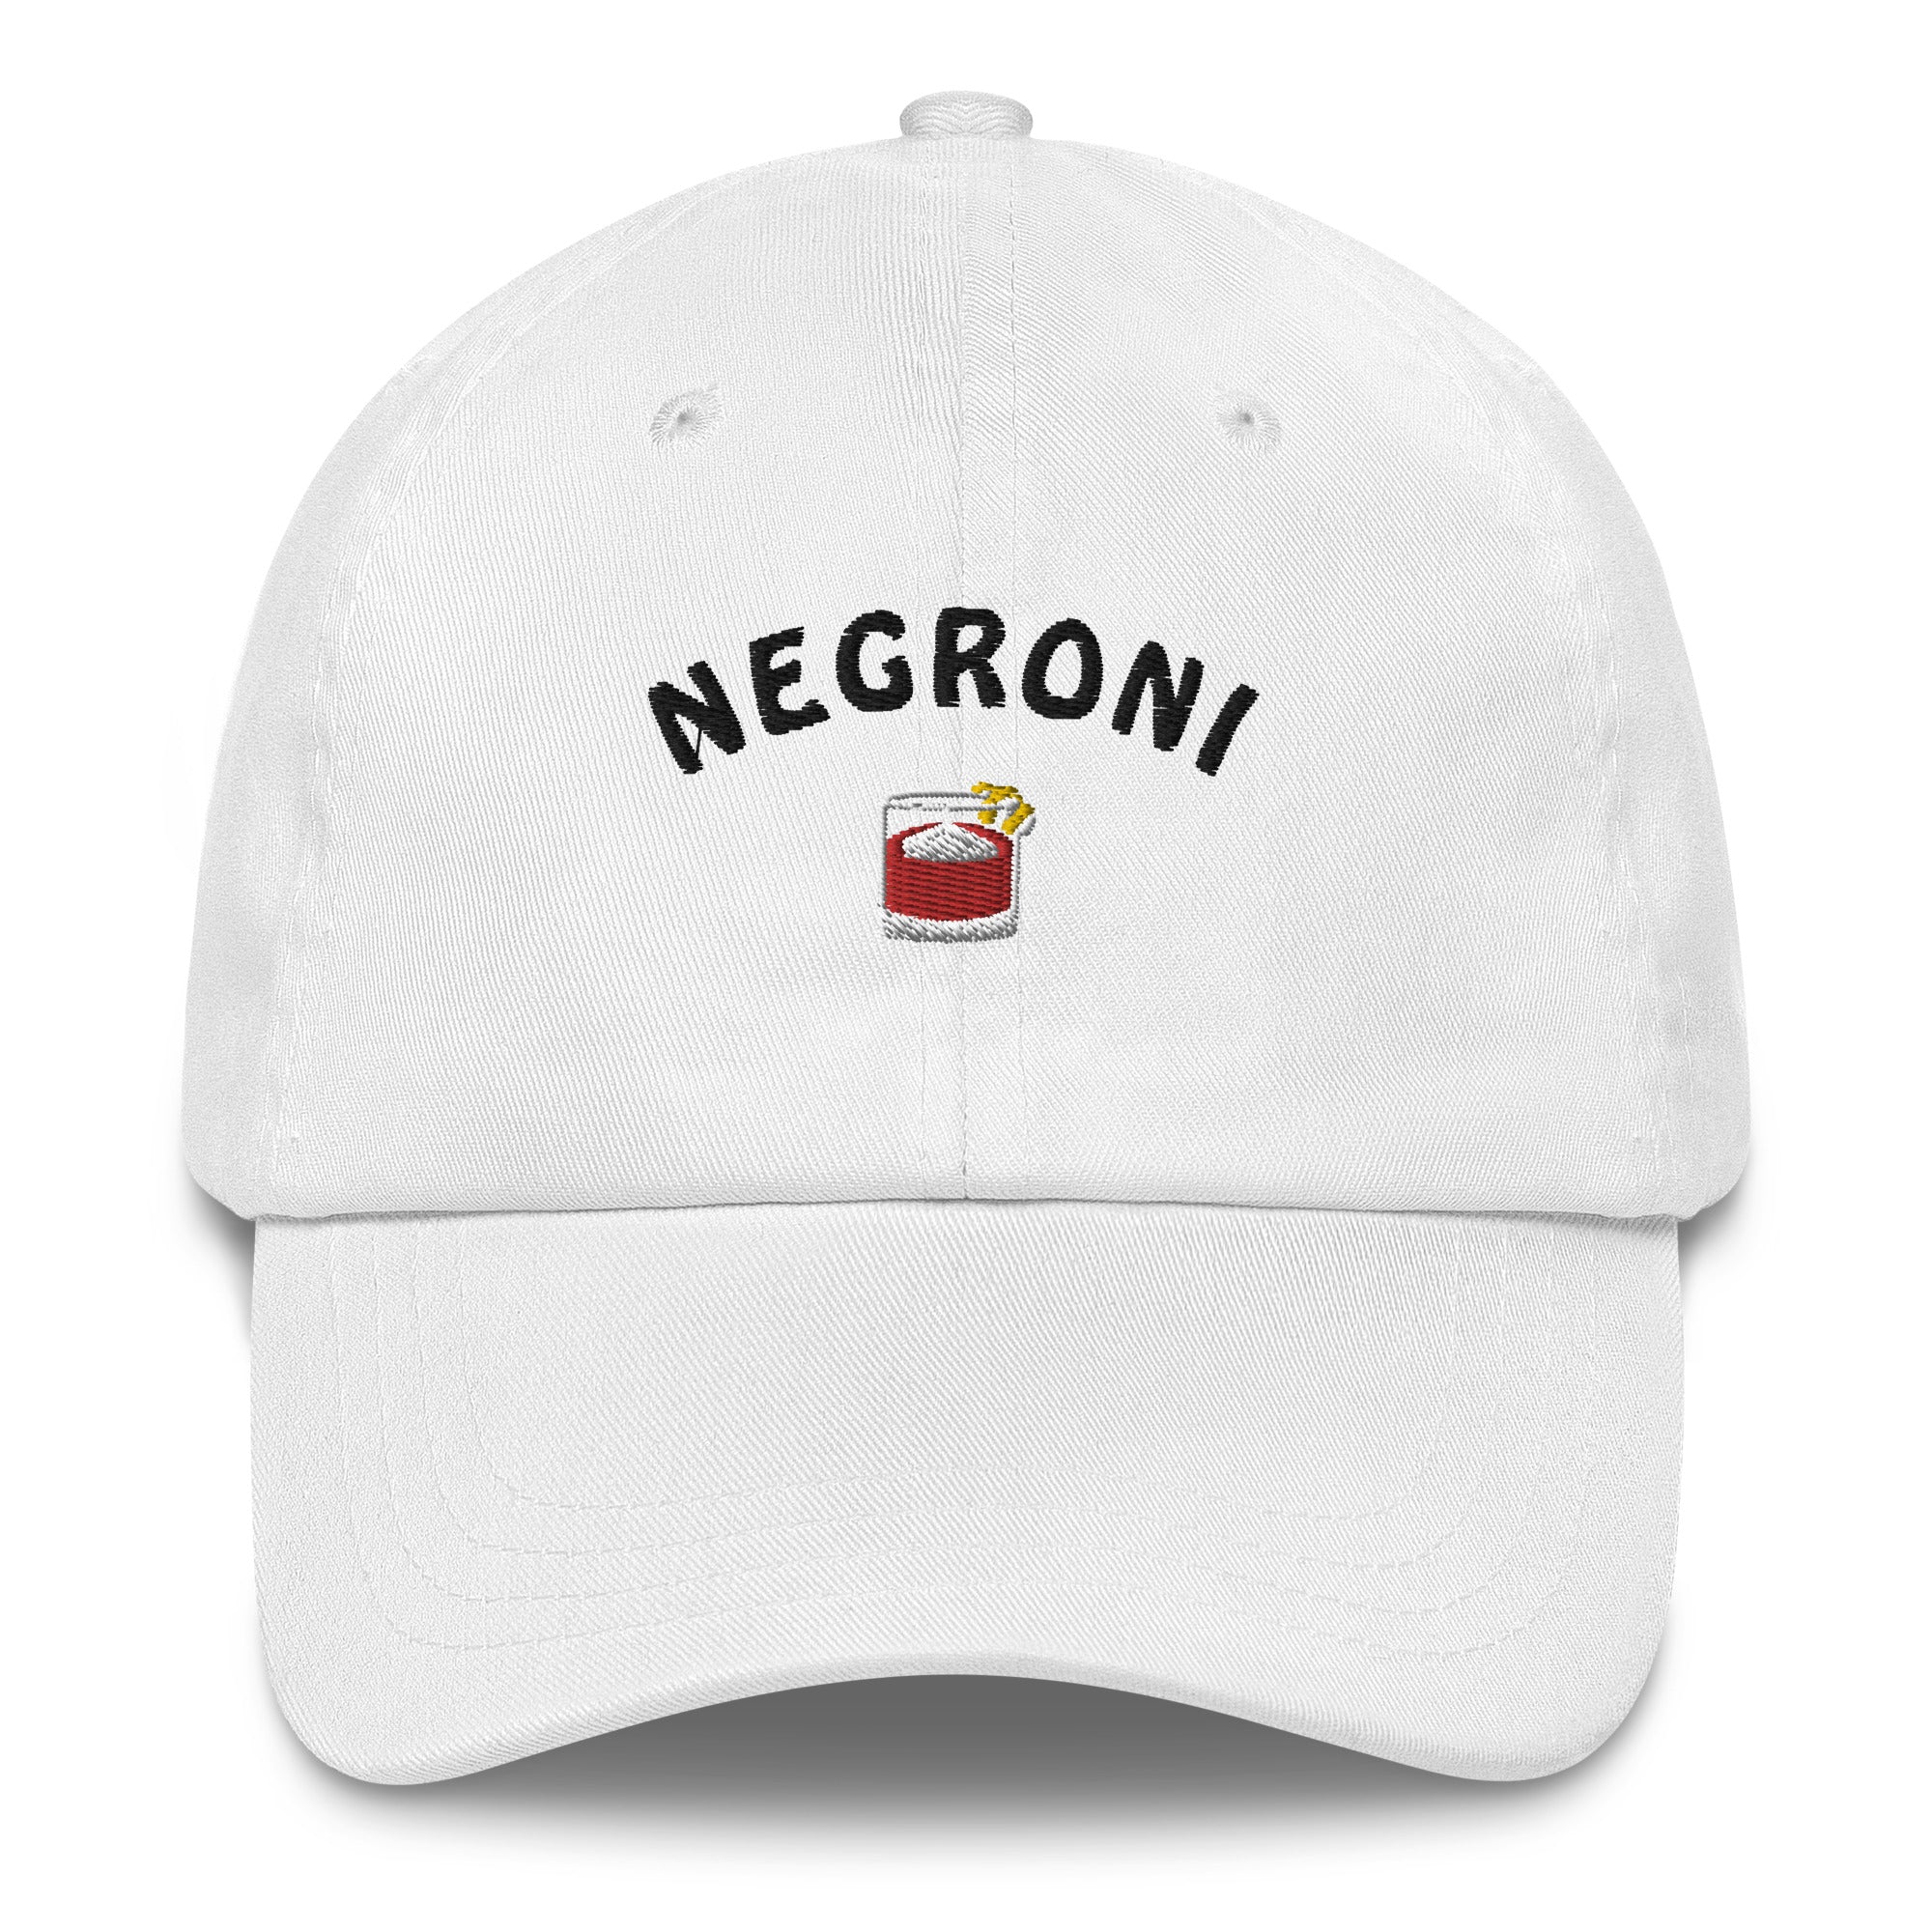 The Negroni - Cap